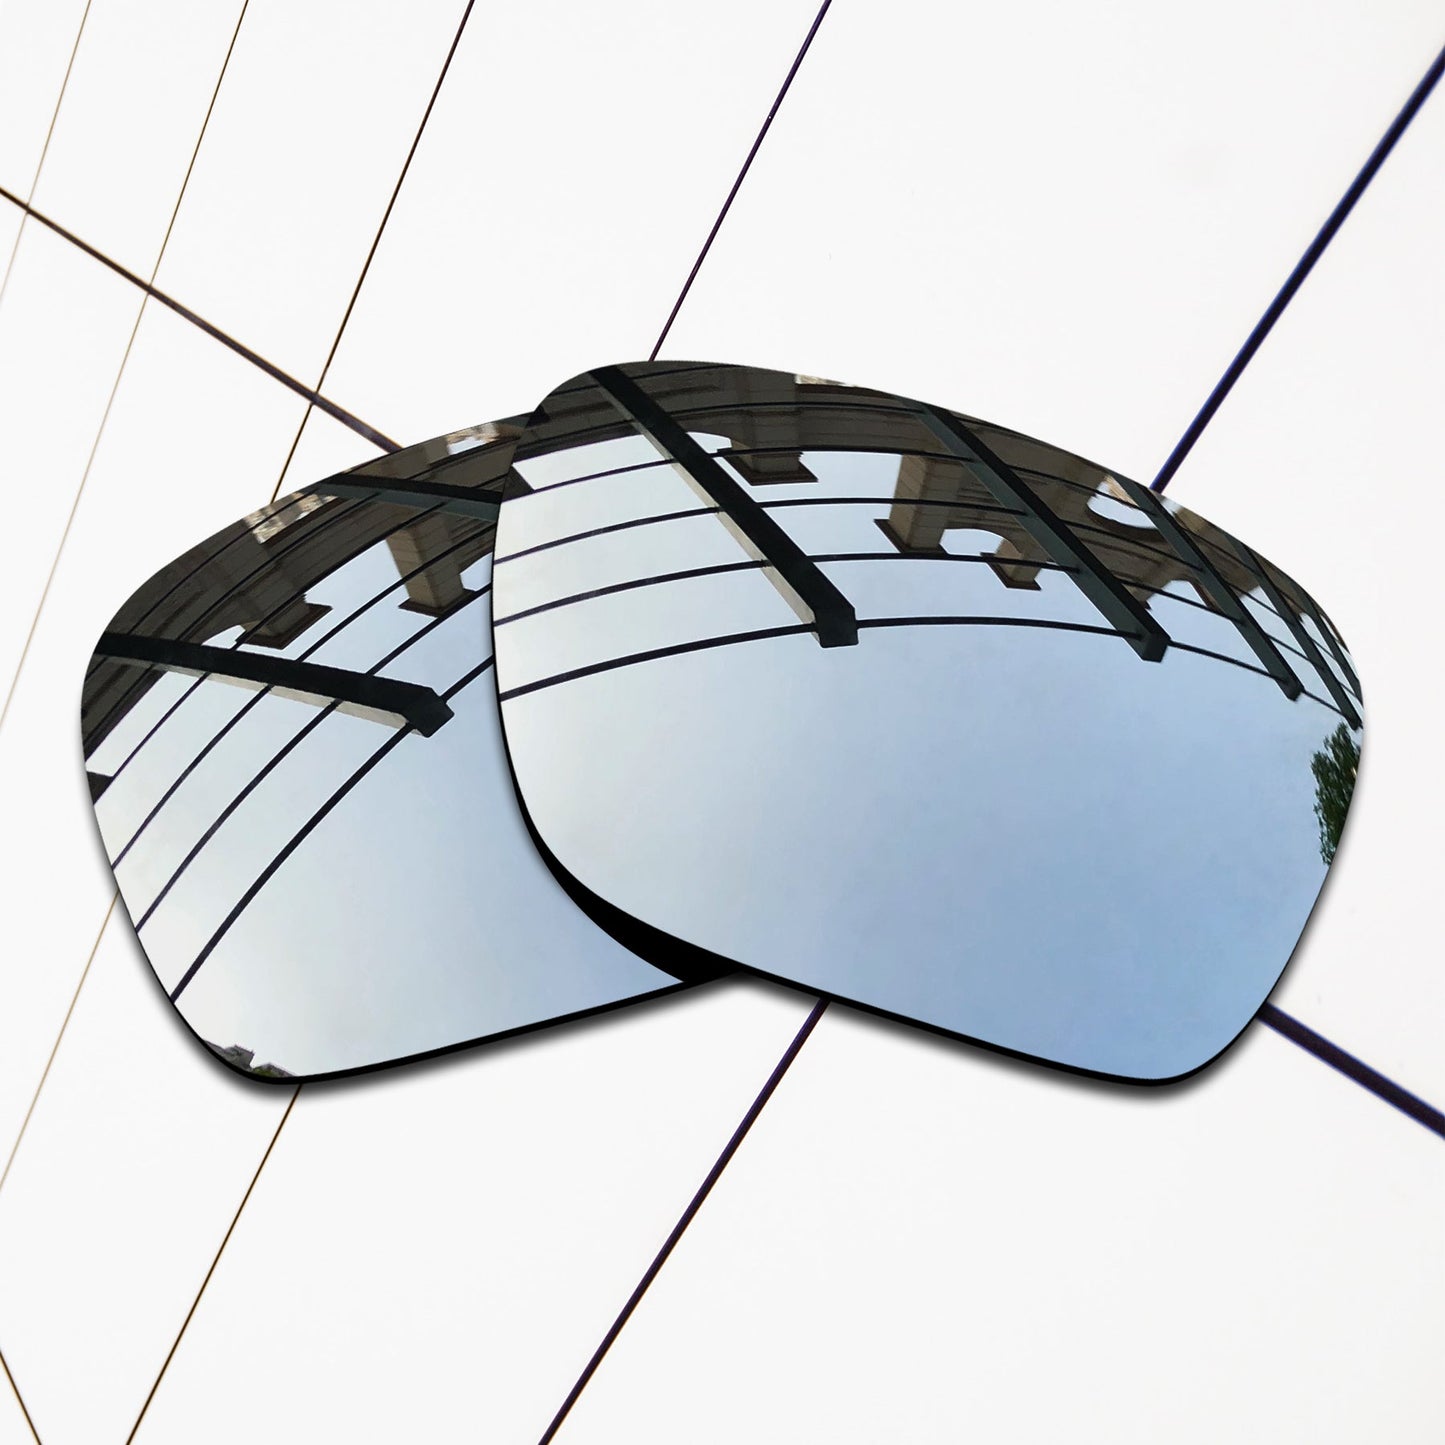 Polarized Replacement Lenses for Oakley Sanctuary Sunglasses